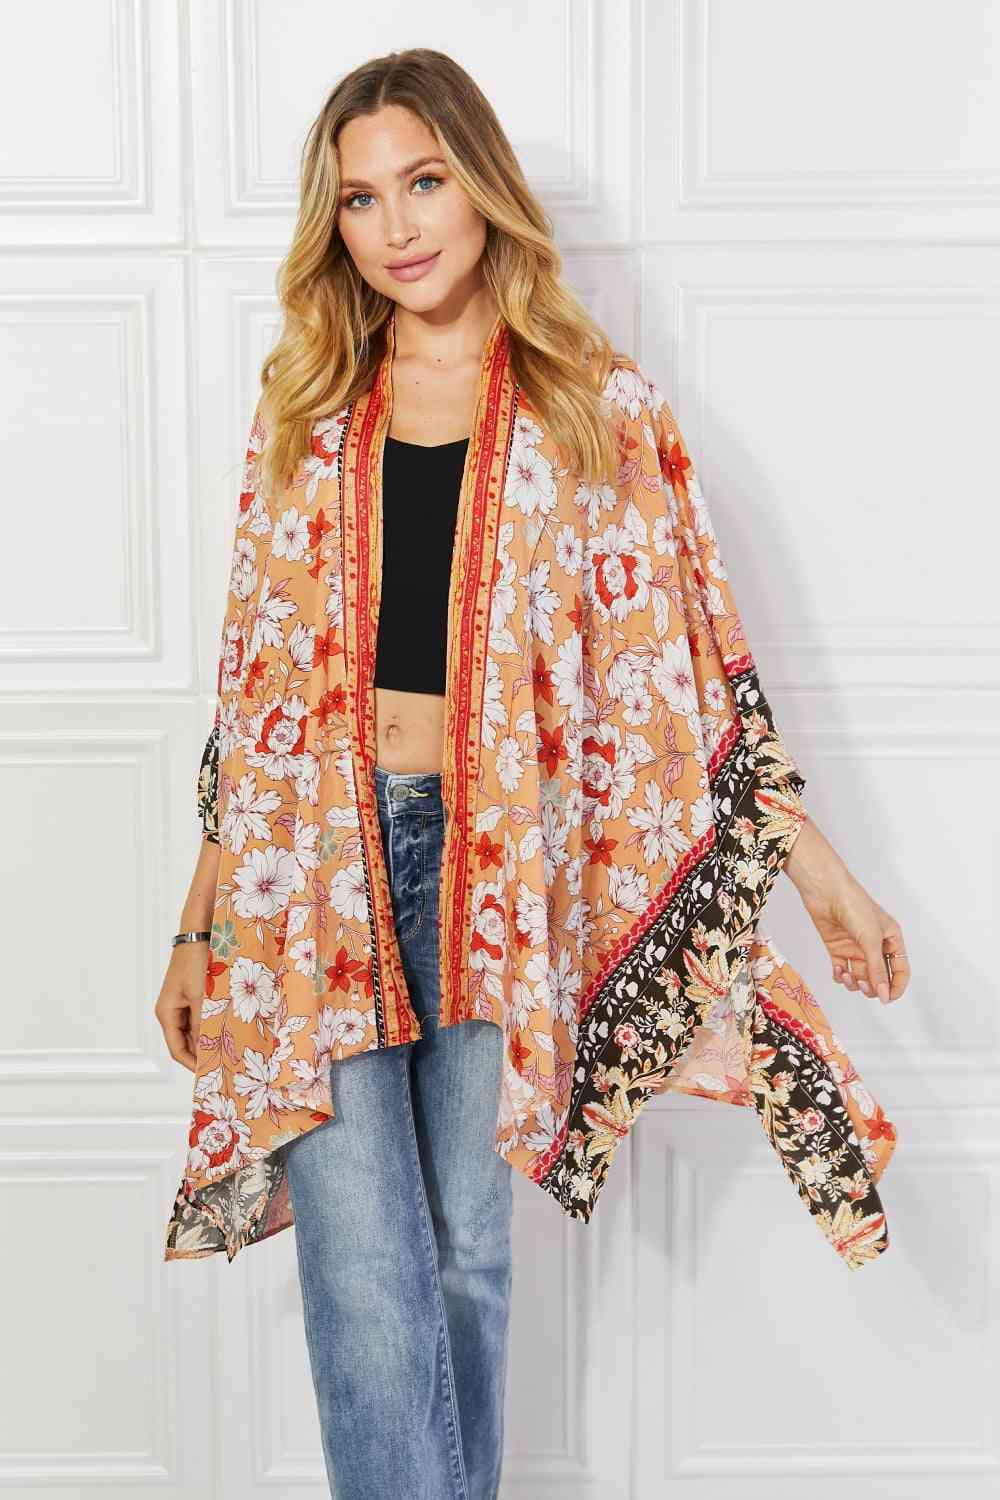 Justin Taylor Peachy Keen Cover-Up Kimono - AMIClubwear